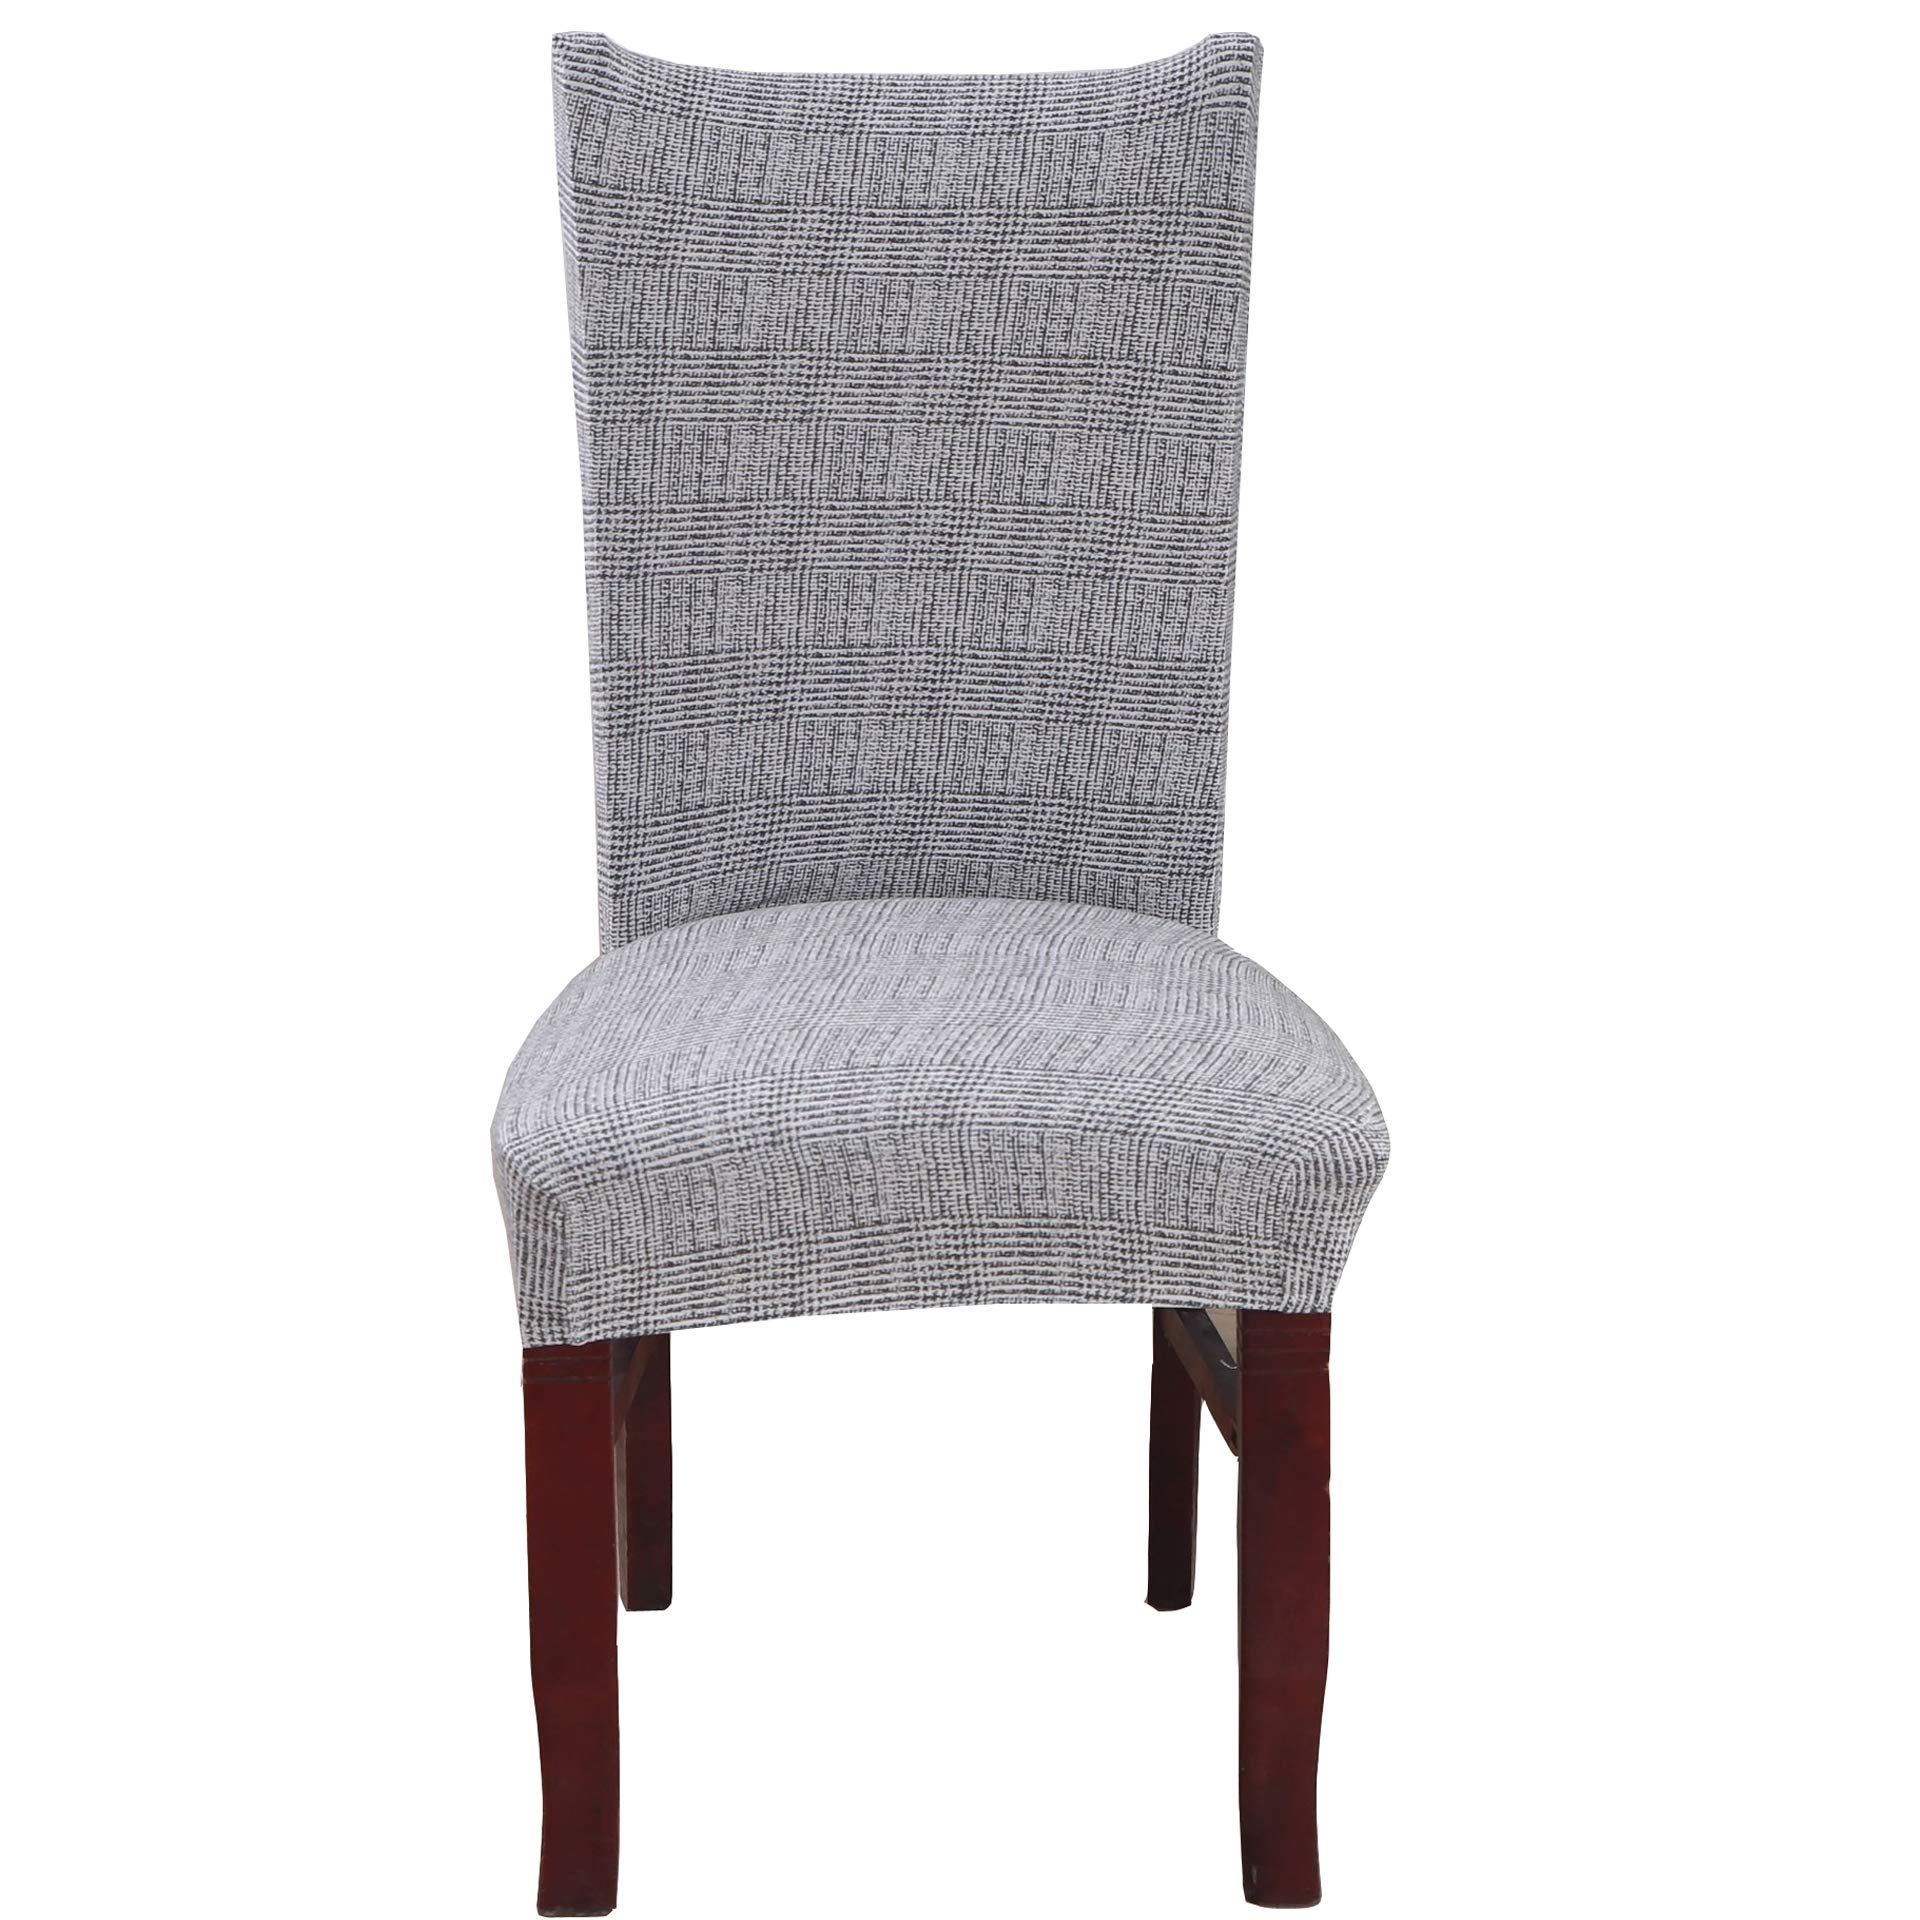 RRP £18.97 TEERFU Dining Room Chair Covers Slipcovers Set of 4 - Image 2 of 3